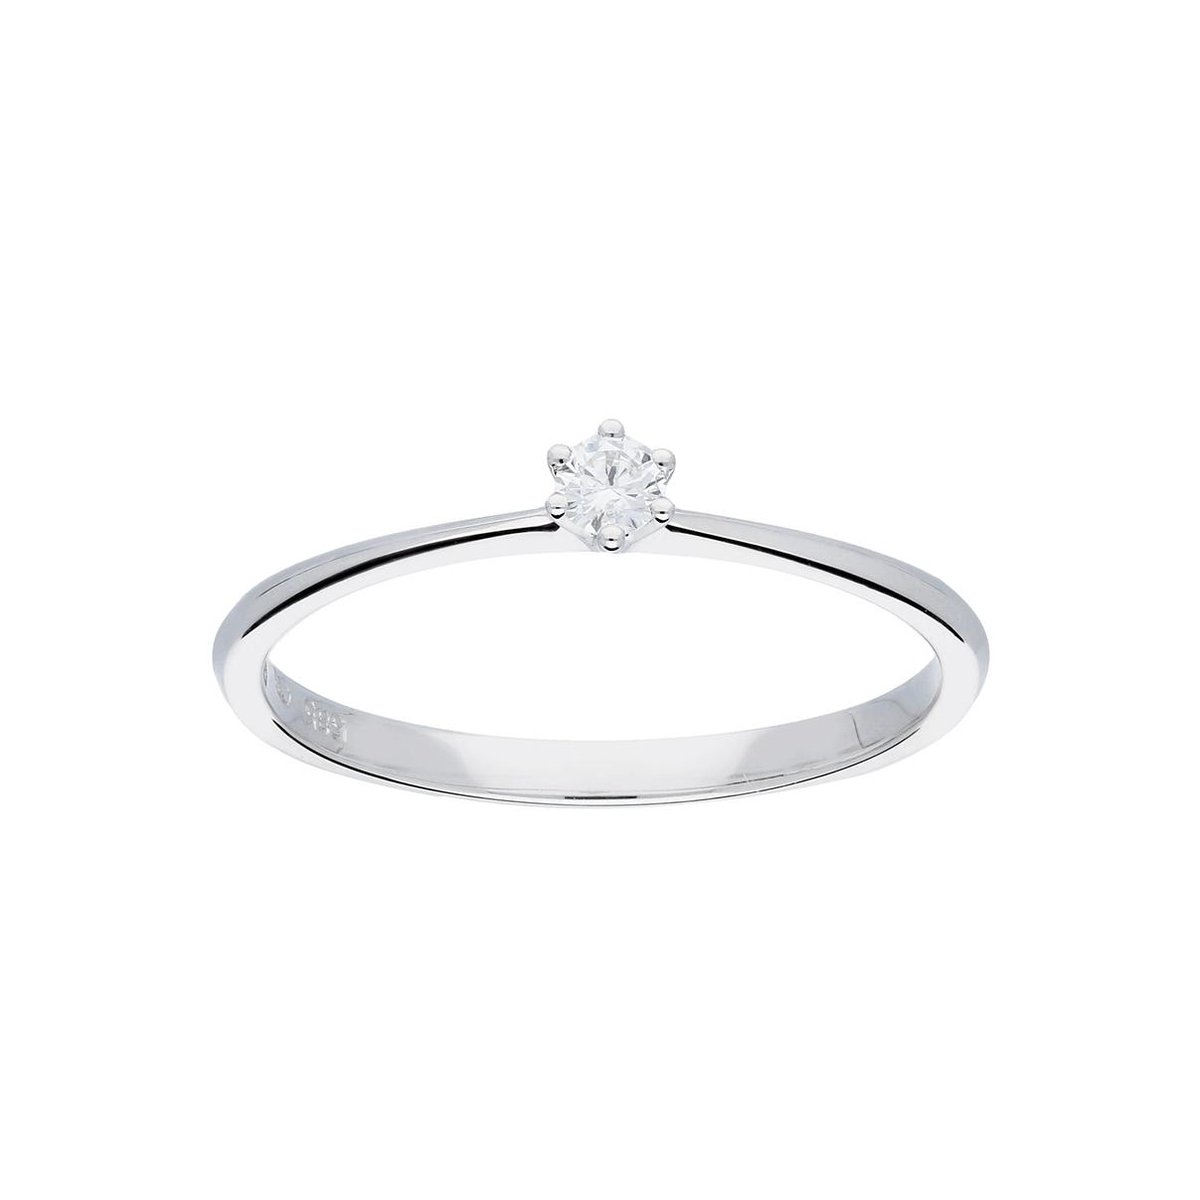 Glow ring met diamant solitaire - 1-0.07ct G/SI - witgoud 14kt - mt 50